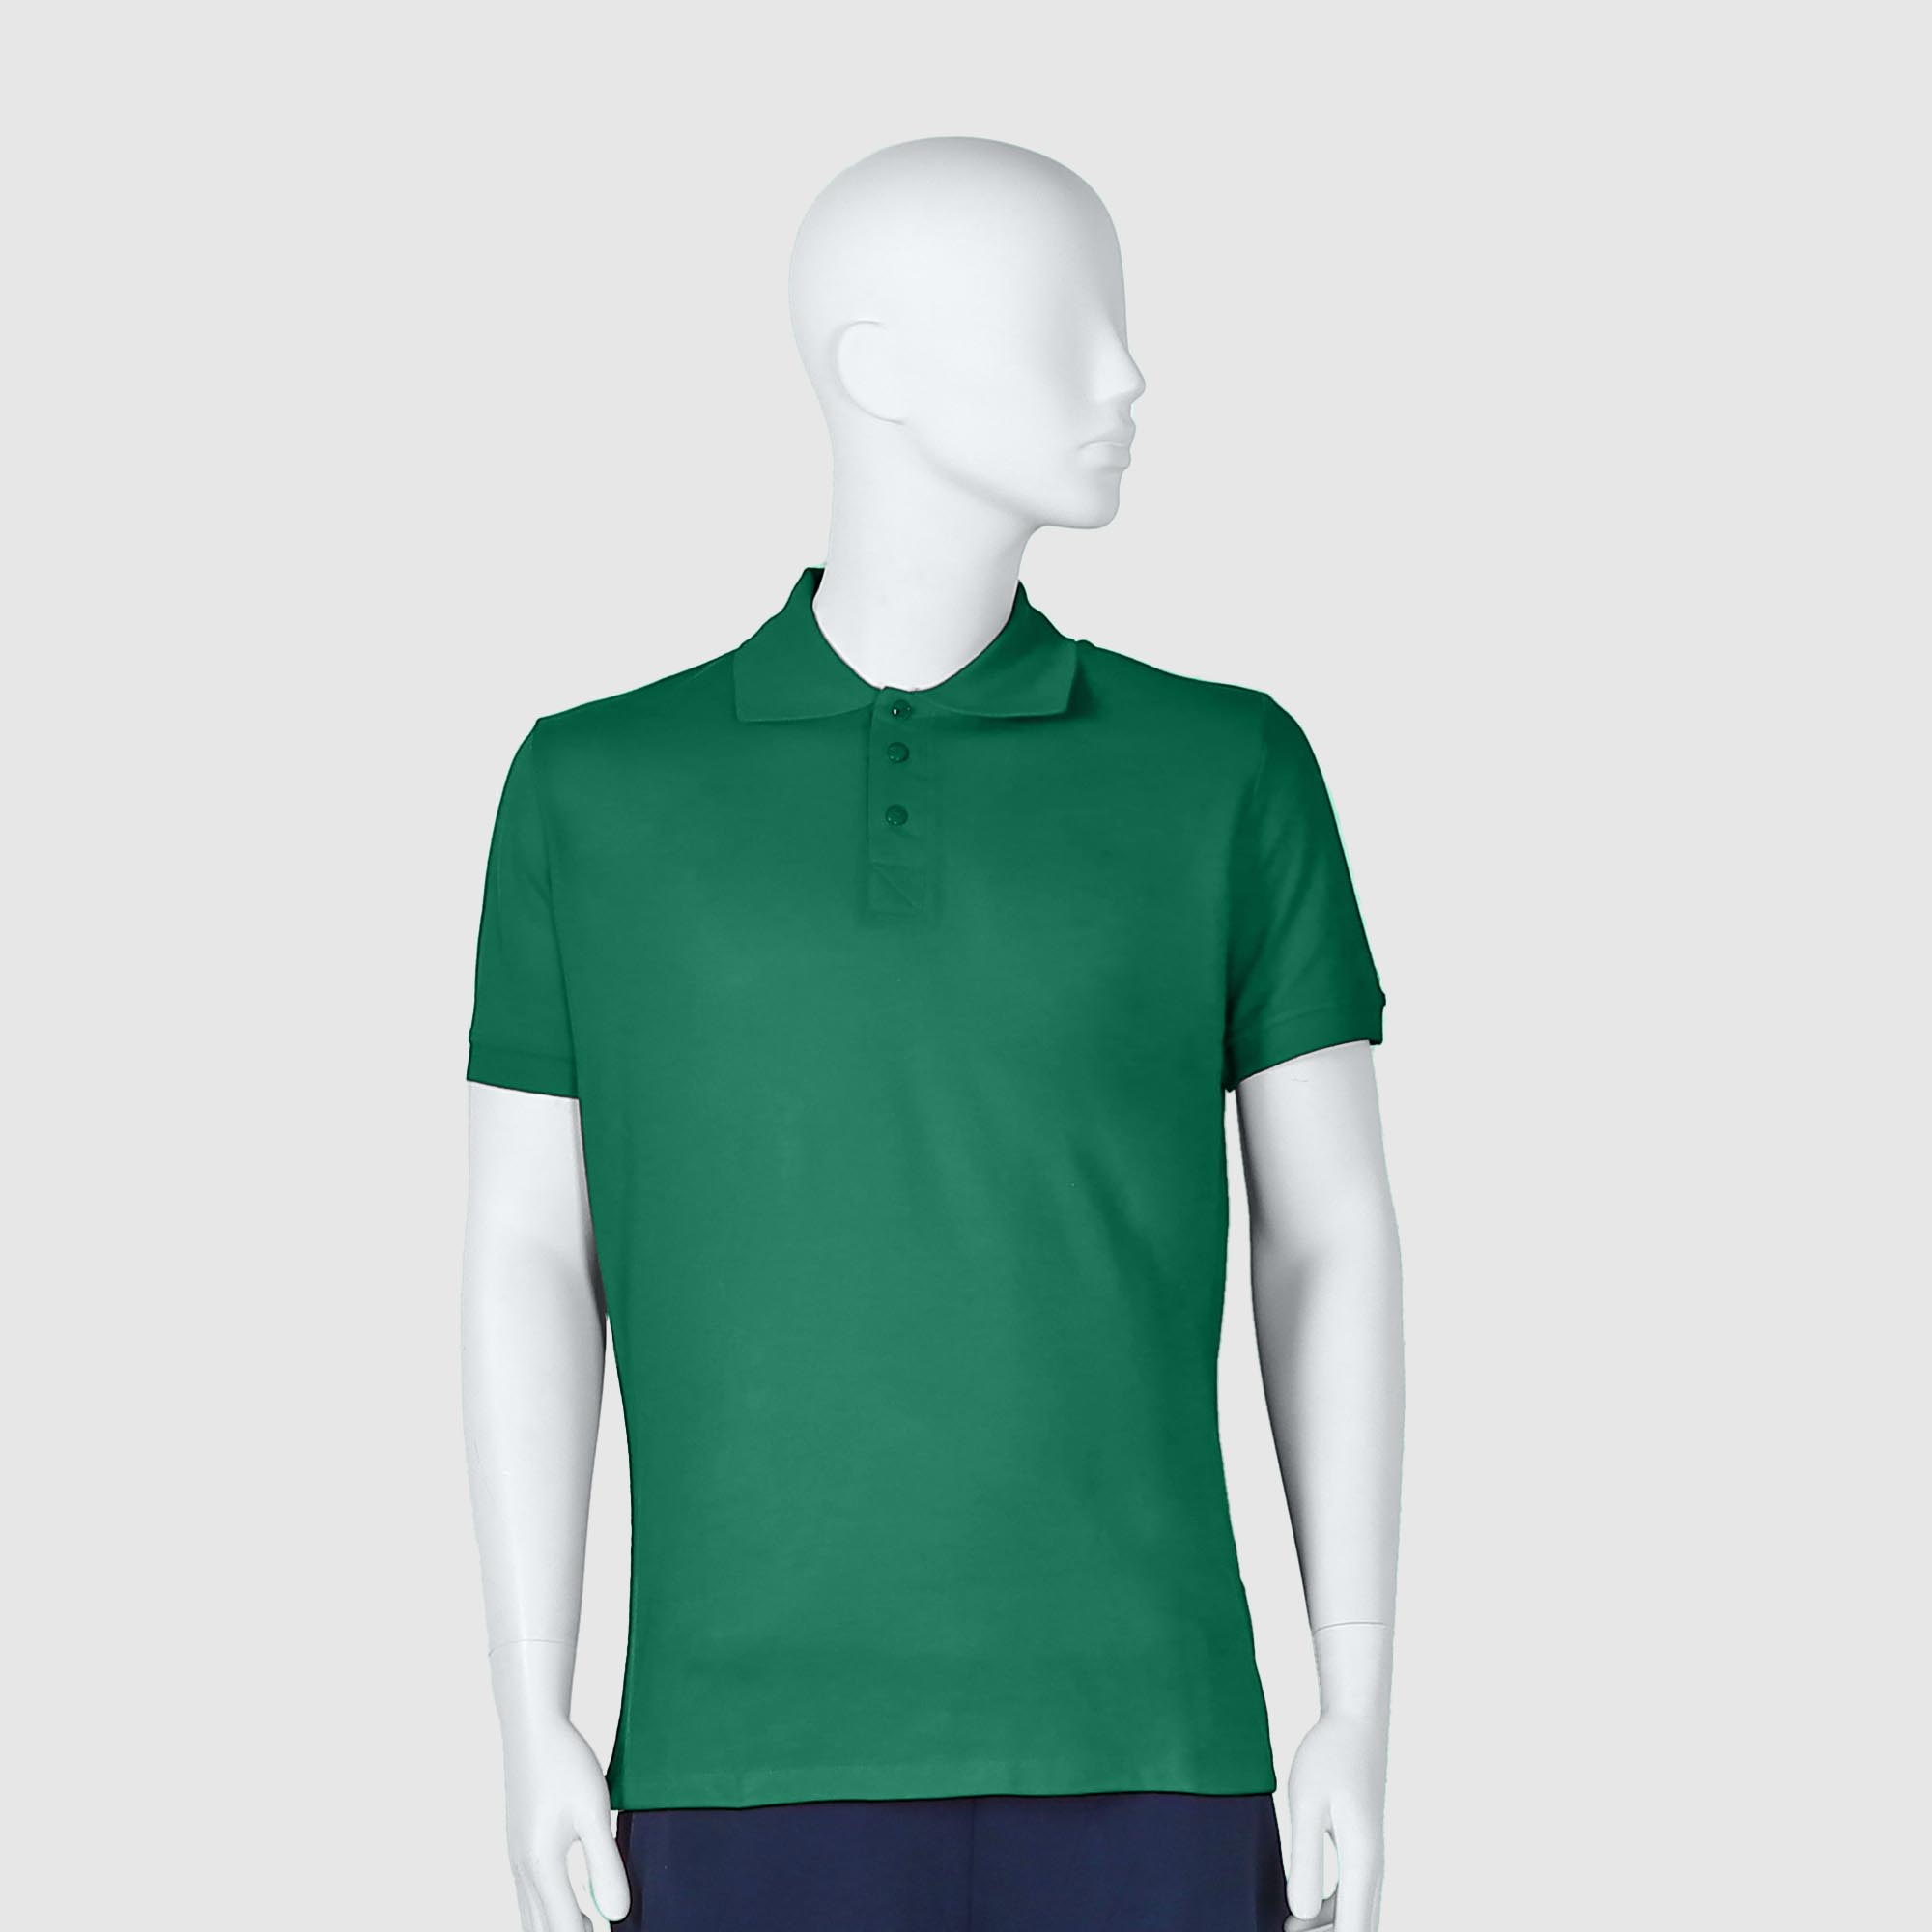 Мужская футболка-поло Diva Teks зелёная (DTD-09), цвет зелёный, размер 44-46